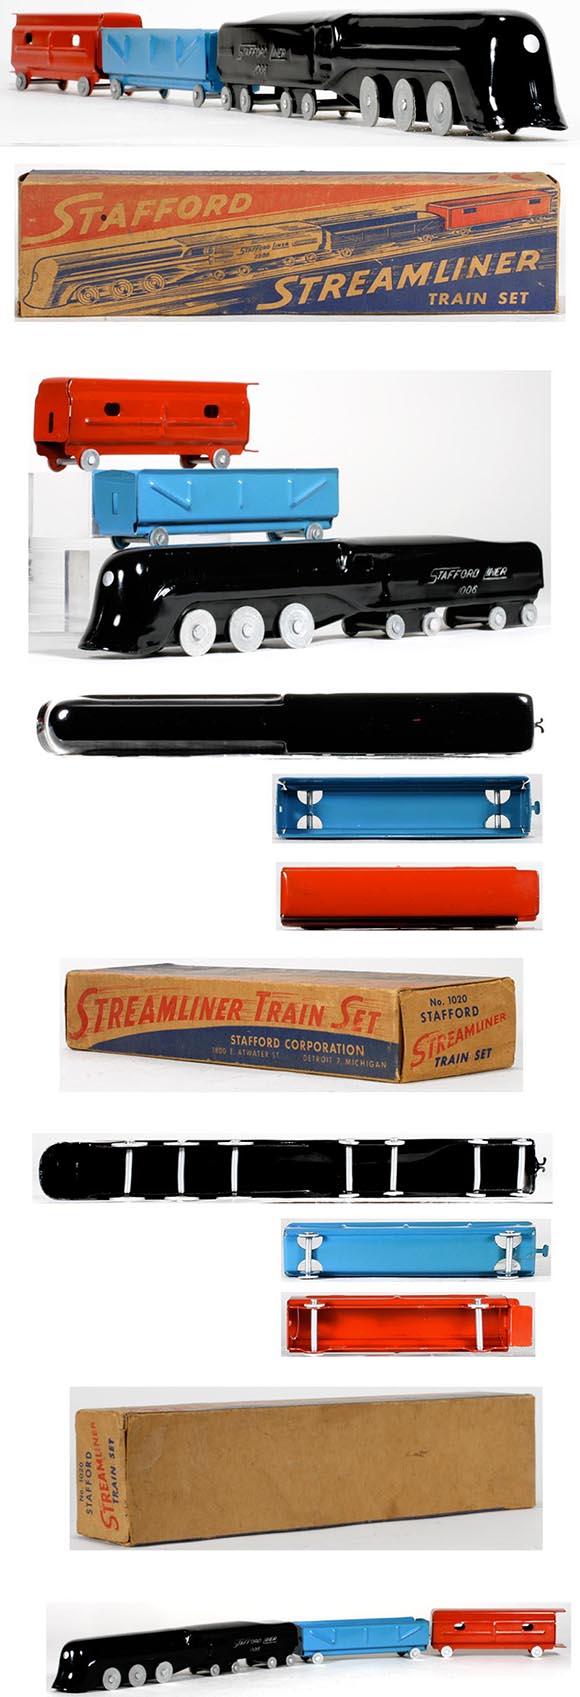 c.1935 Stafford, Streamliner Train Set in Original Box